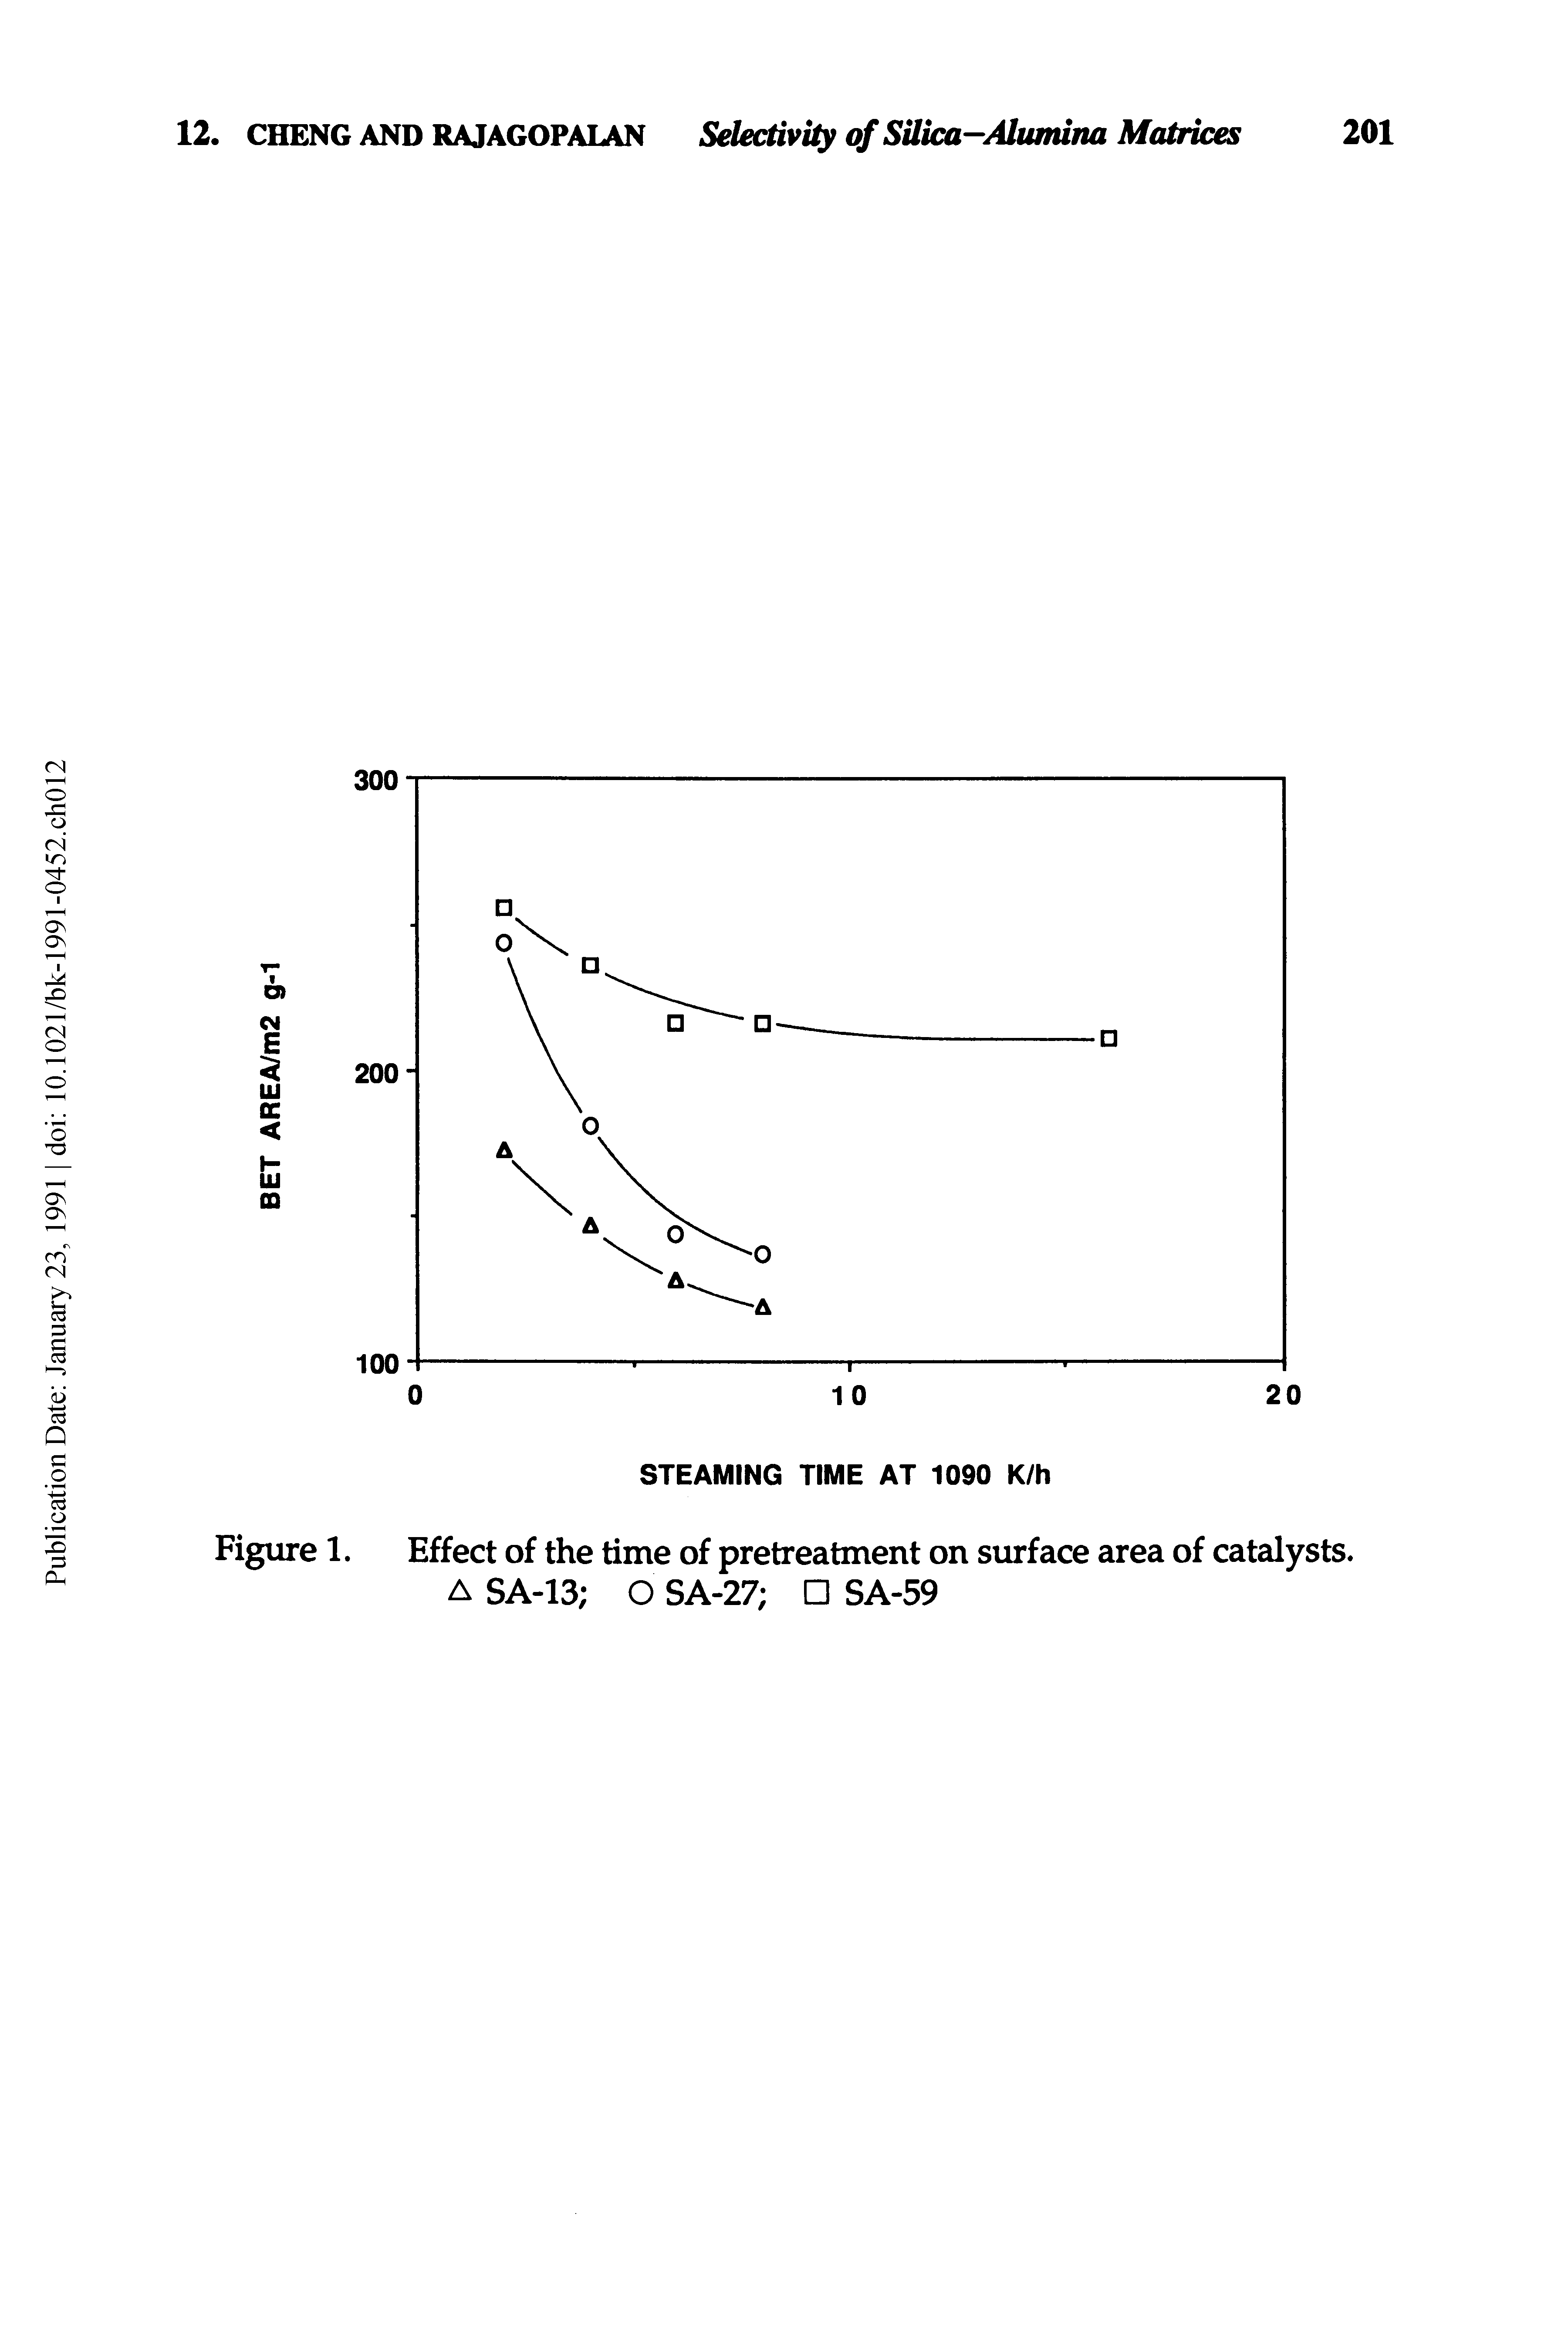 Figure 1. Effect of the time of pretreatment on surface area of catalysts. A SA-13 O SA-27 SA-59...